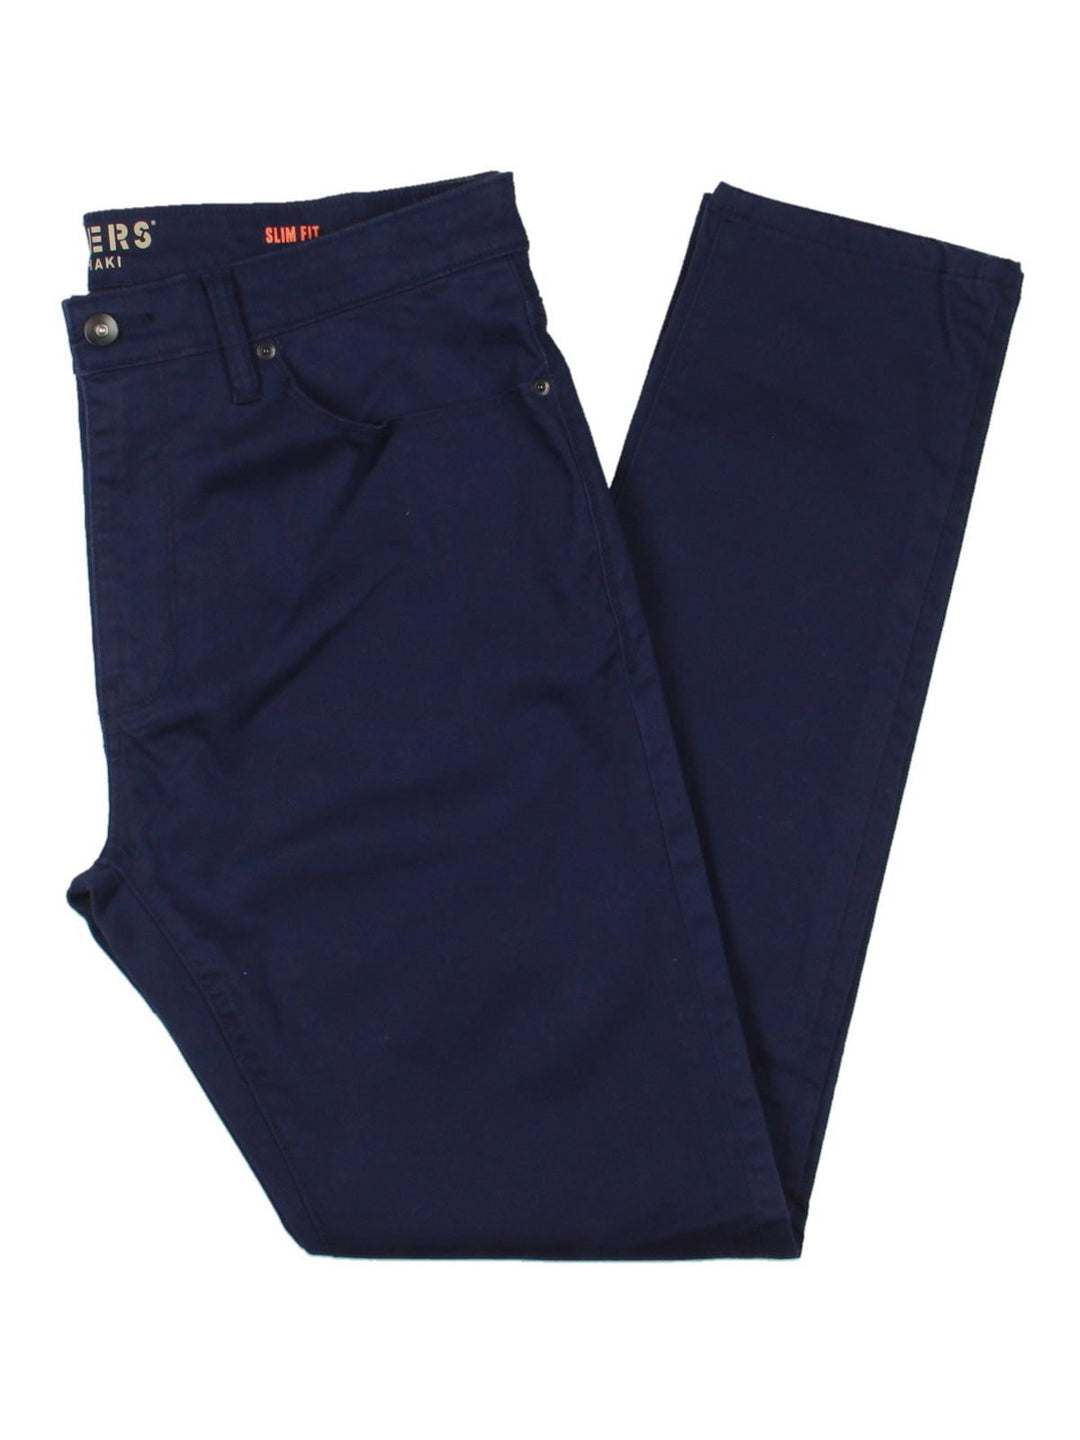 Dockers Men's Slim Fit Jean Cut Pants Blue Size 36X34